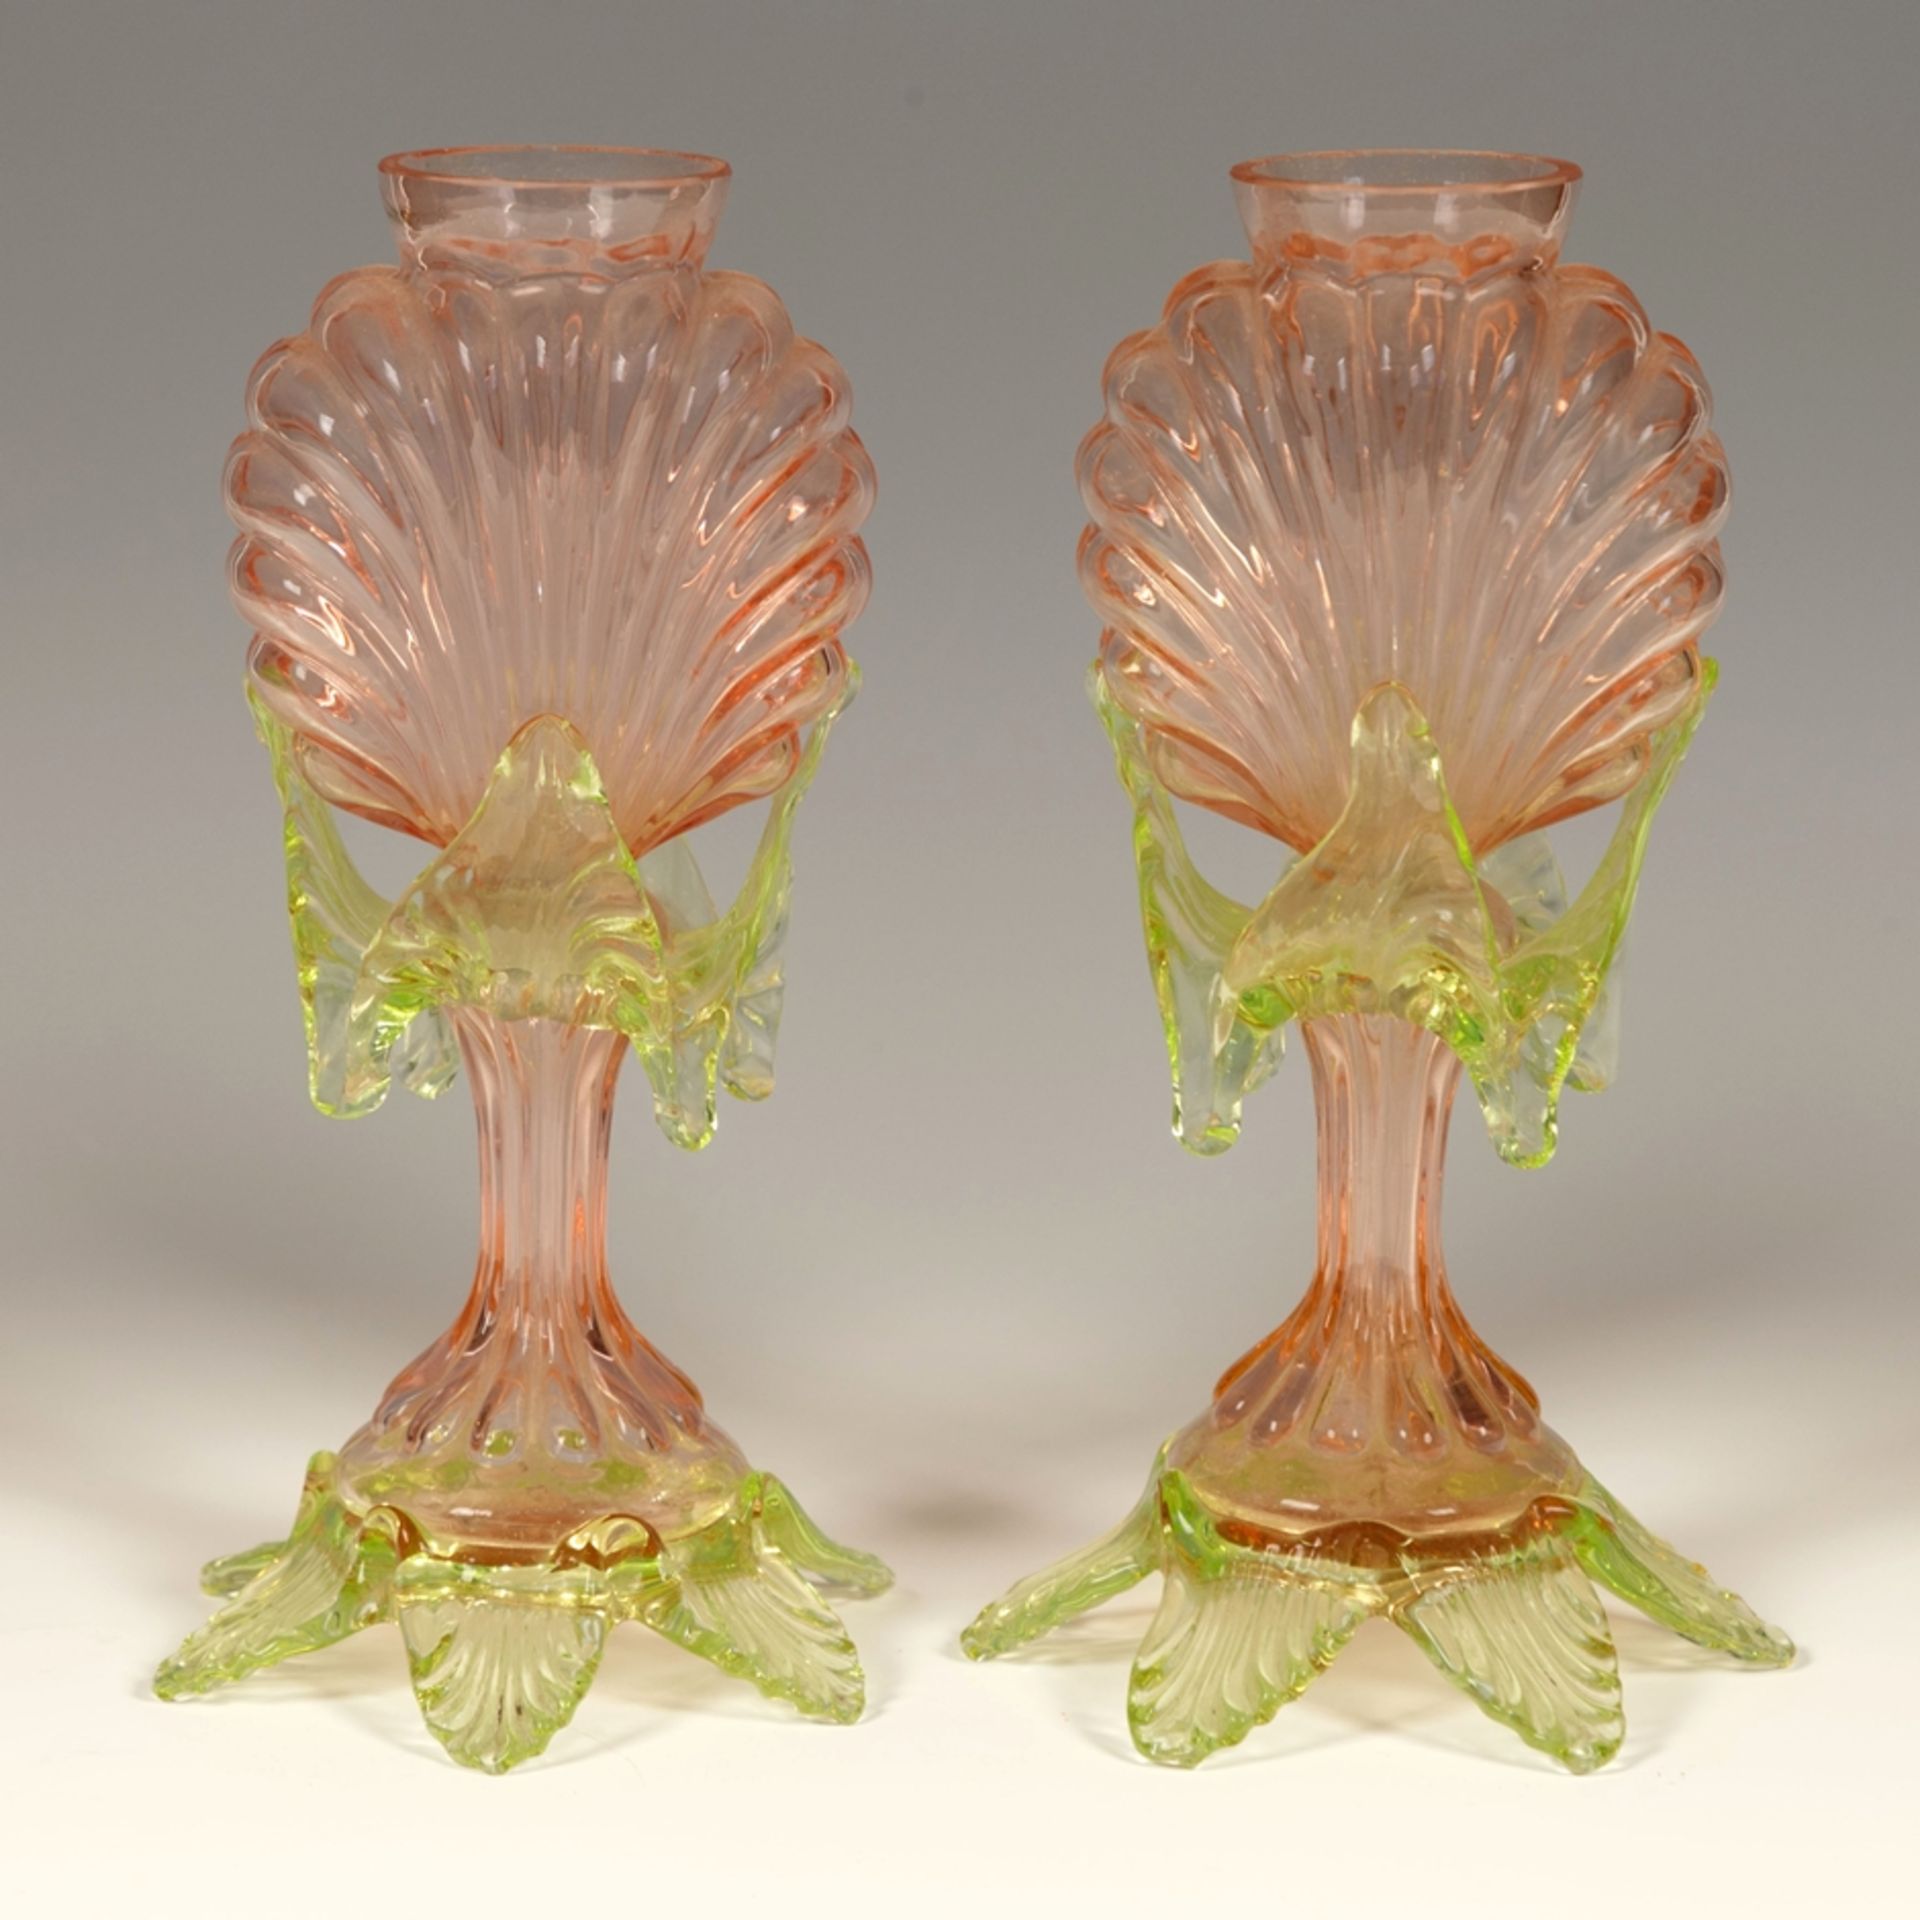 Paar dekorative Jugendstilvasen. Roséfarbenes und grünes Glas. Um 1880. H 18 cm. Sammlung Bühl Kons